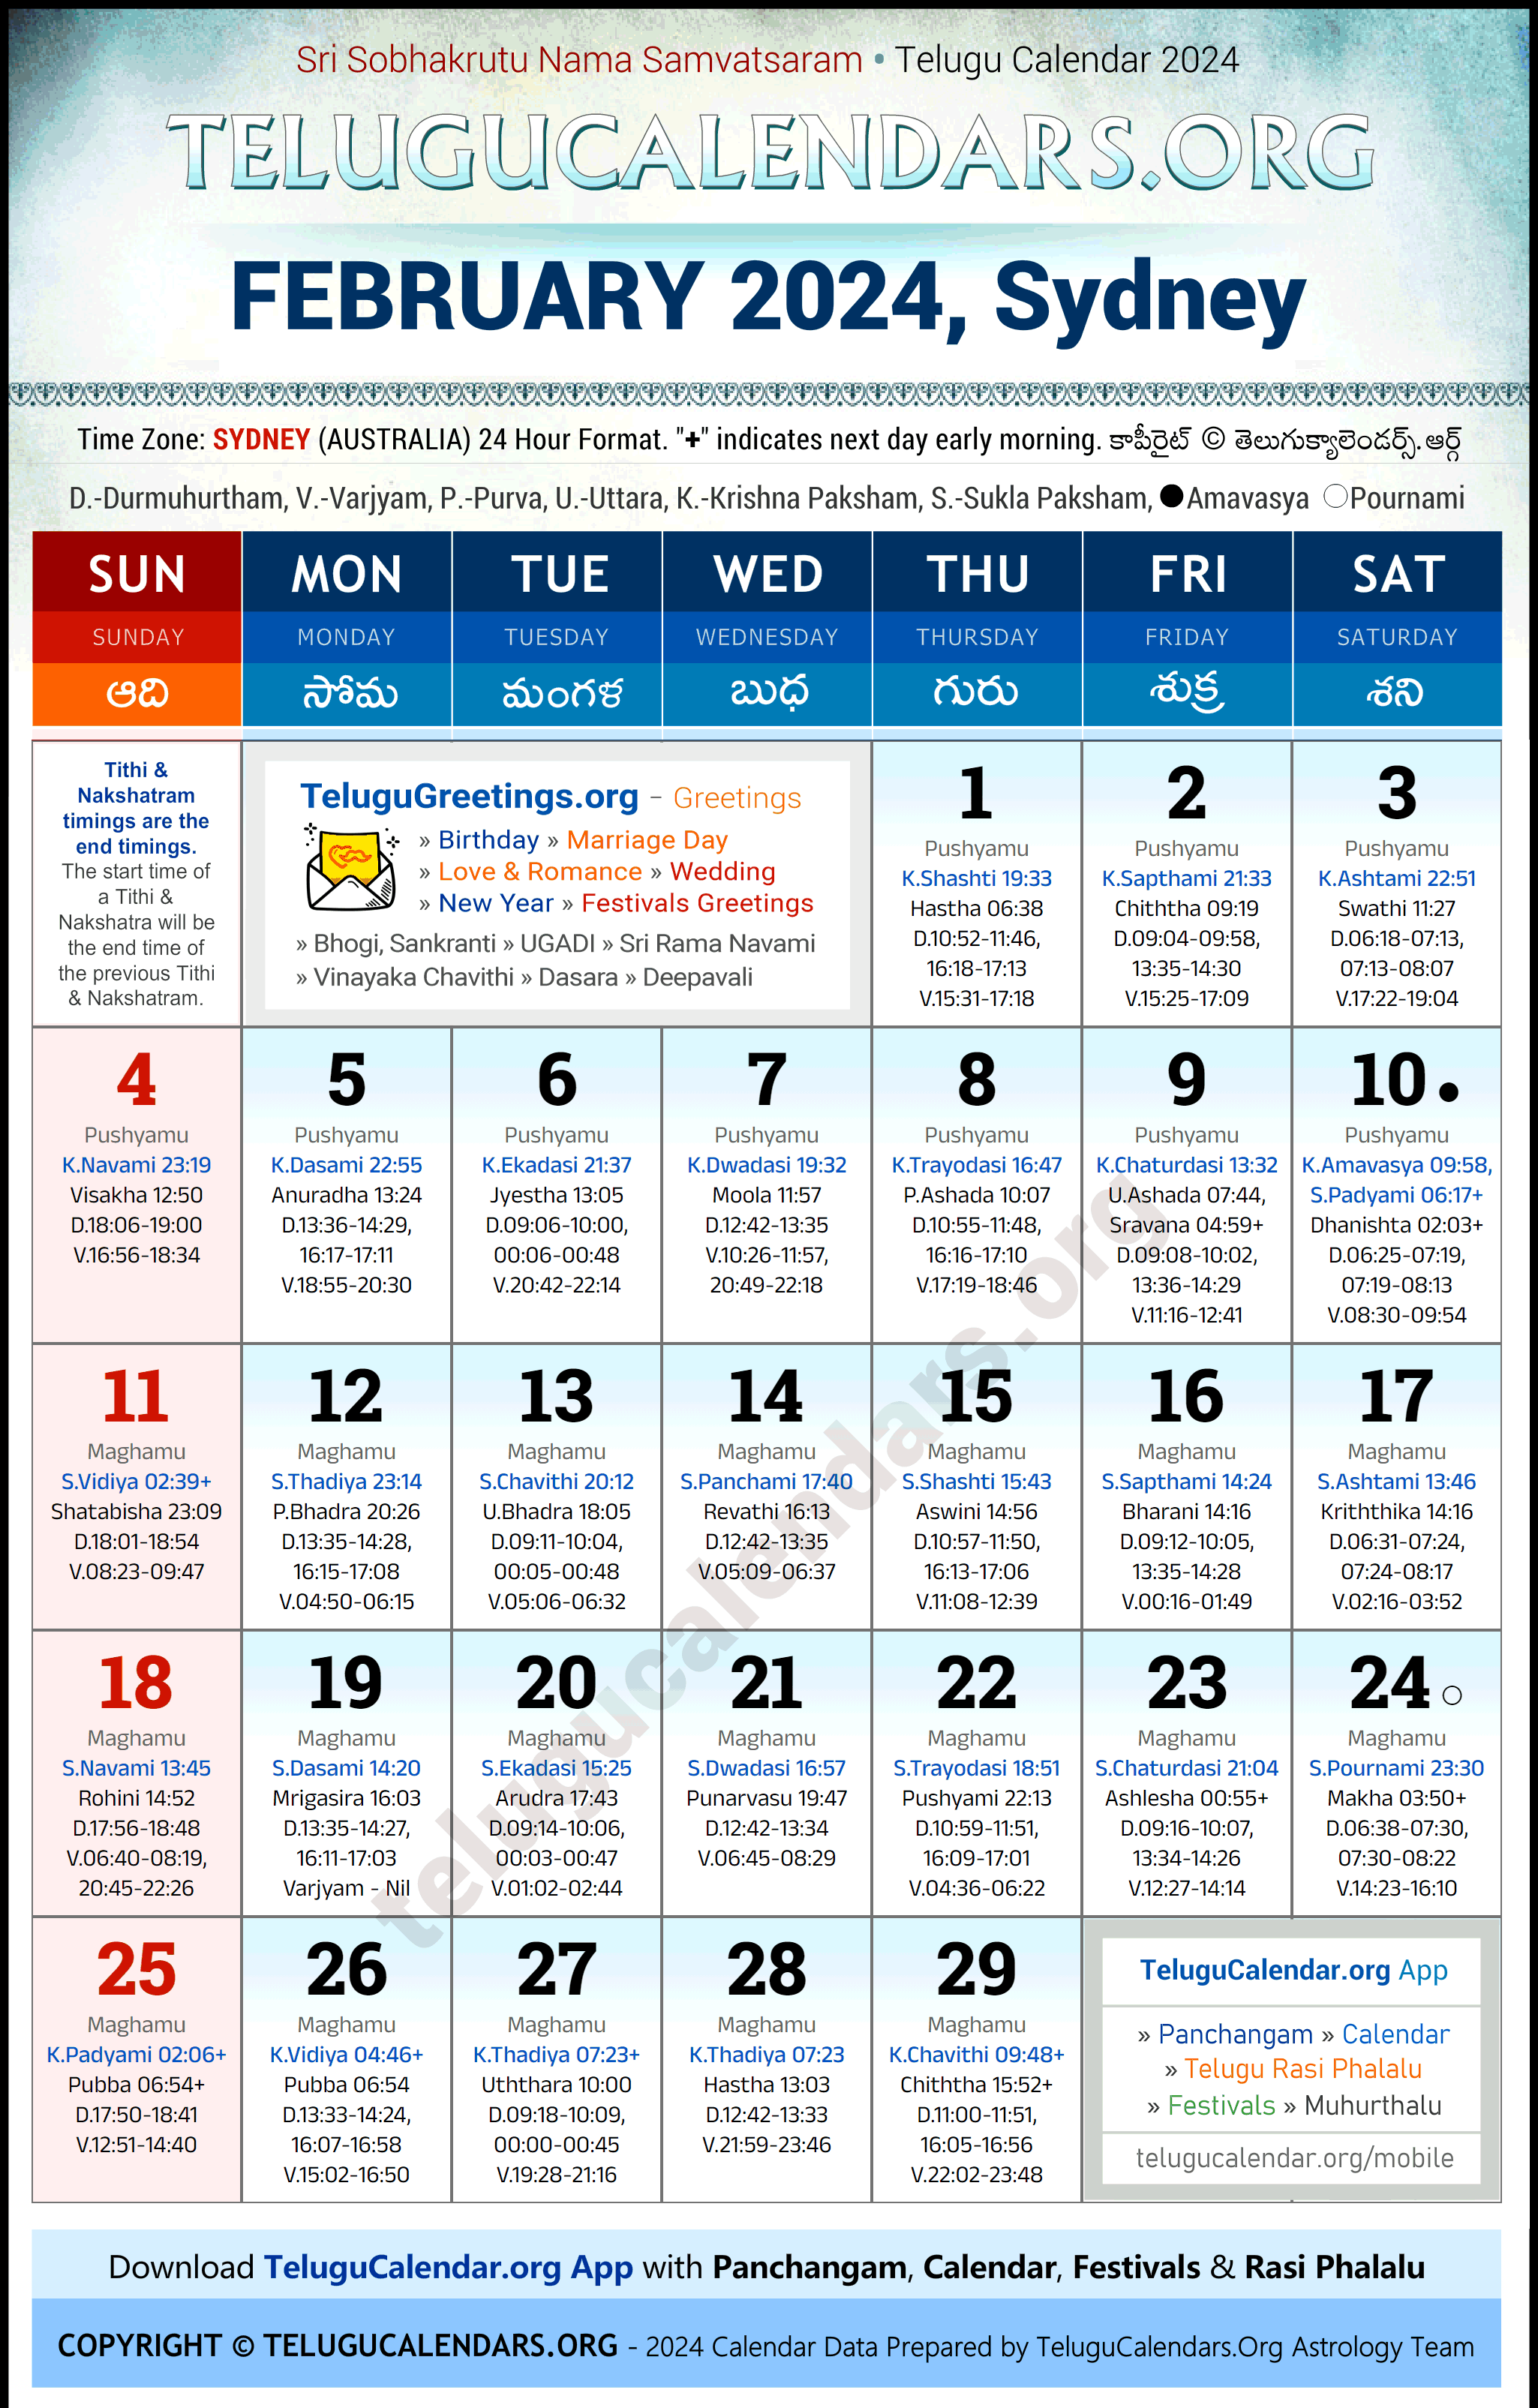 Telugu Calendar 2024 February Festivals for Sydney